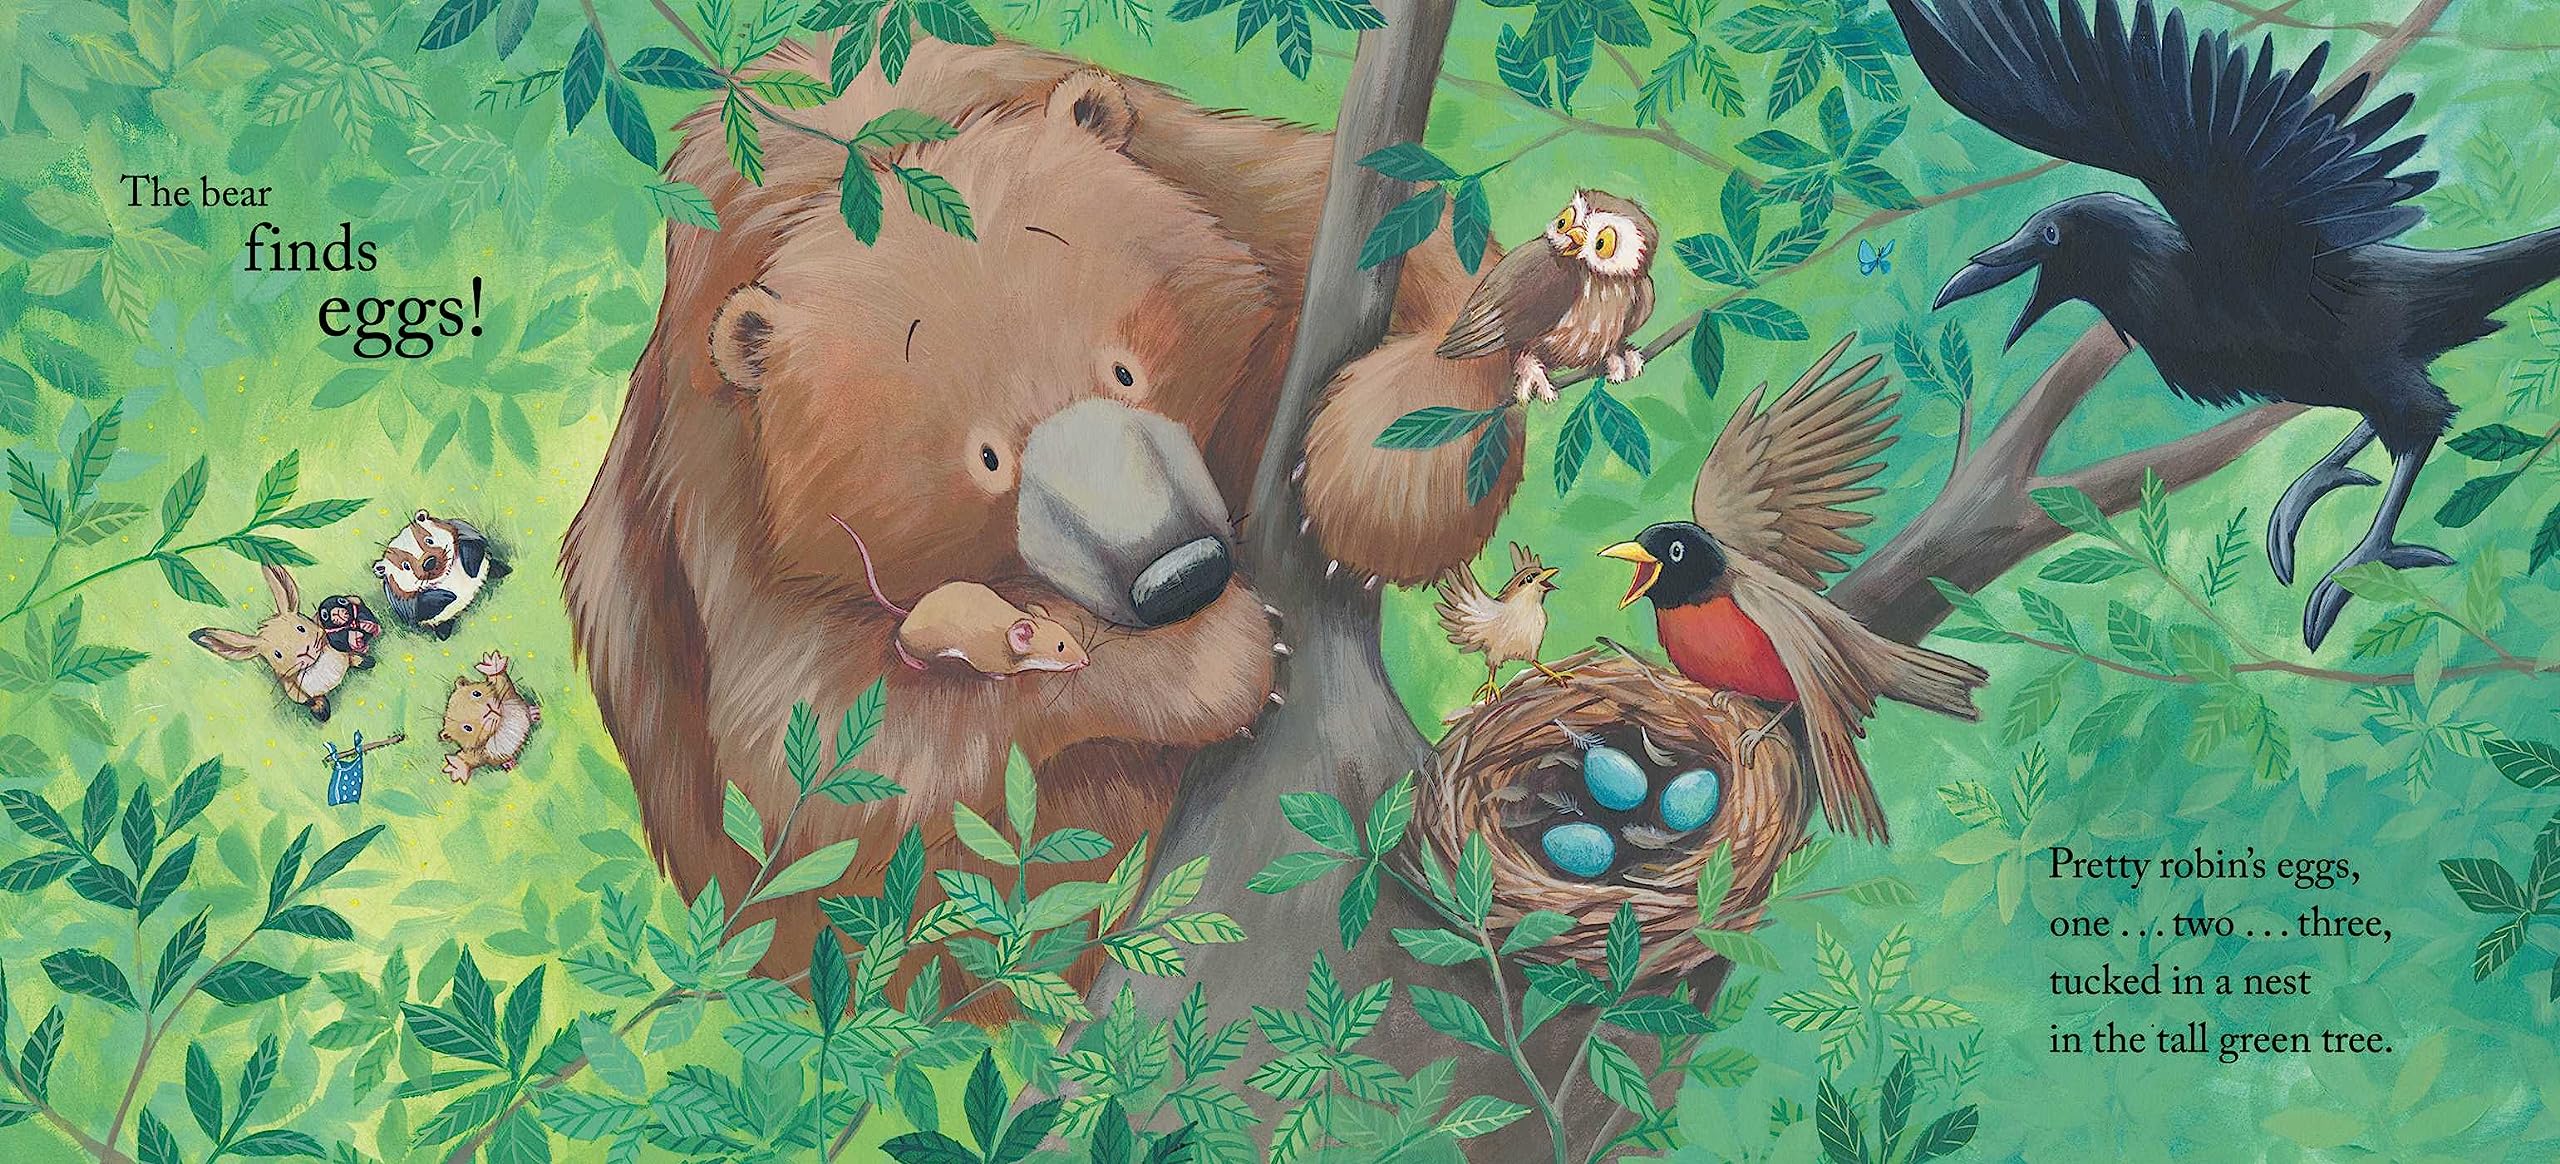 Bear Finds Eggs (The Bear Books)